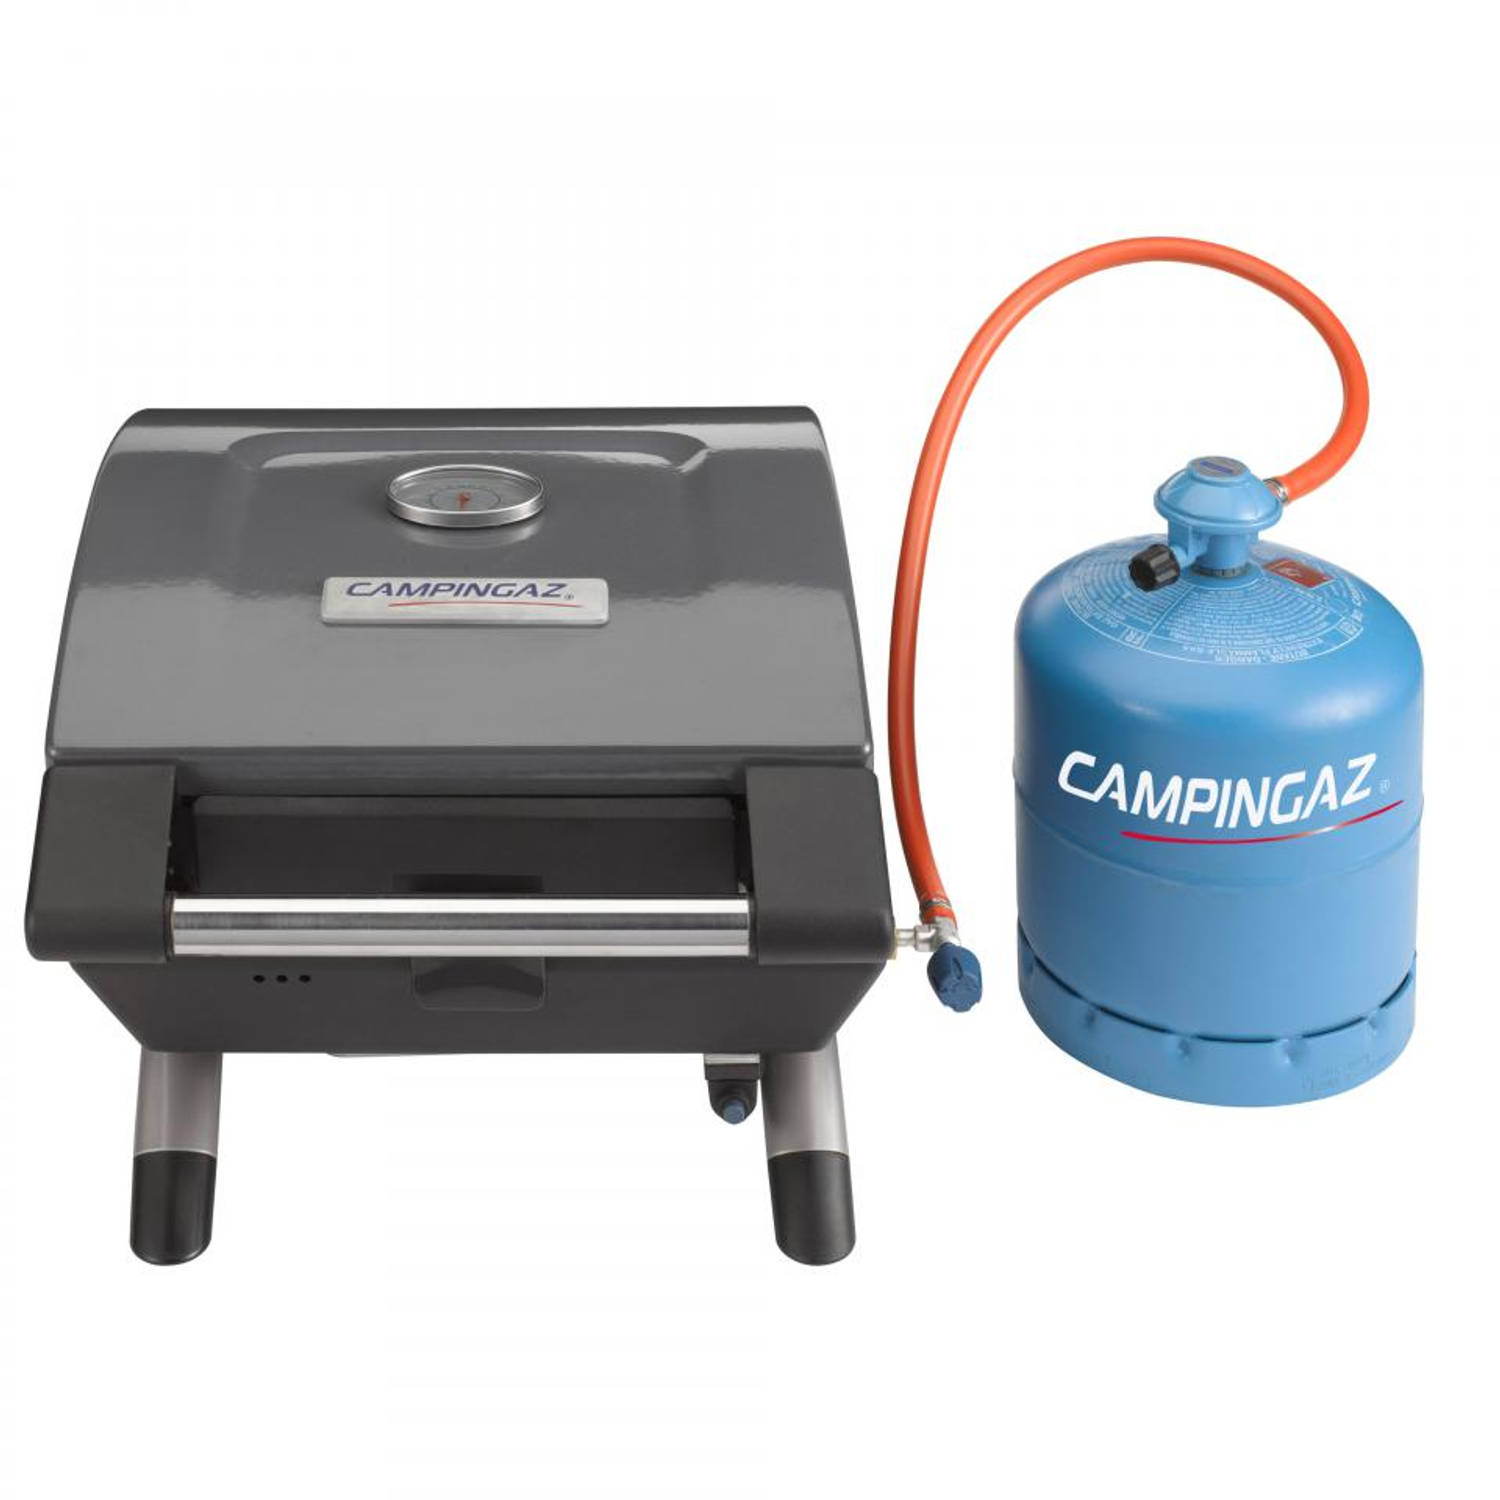 Campingaz 1 Series Compact LX R gasbarbecue - zwart